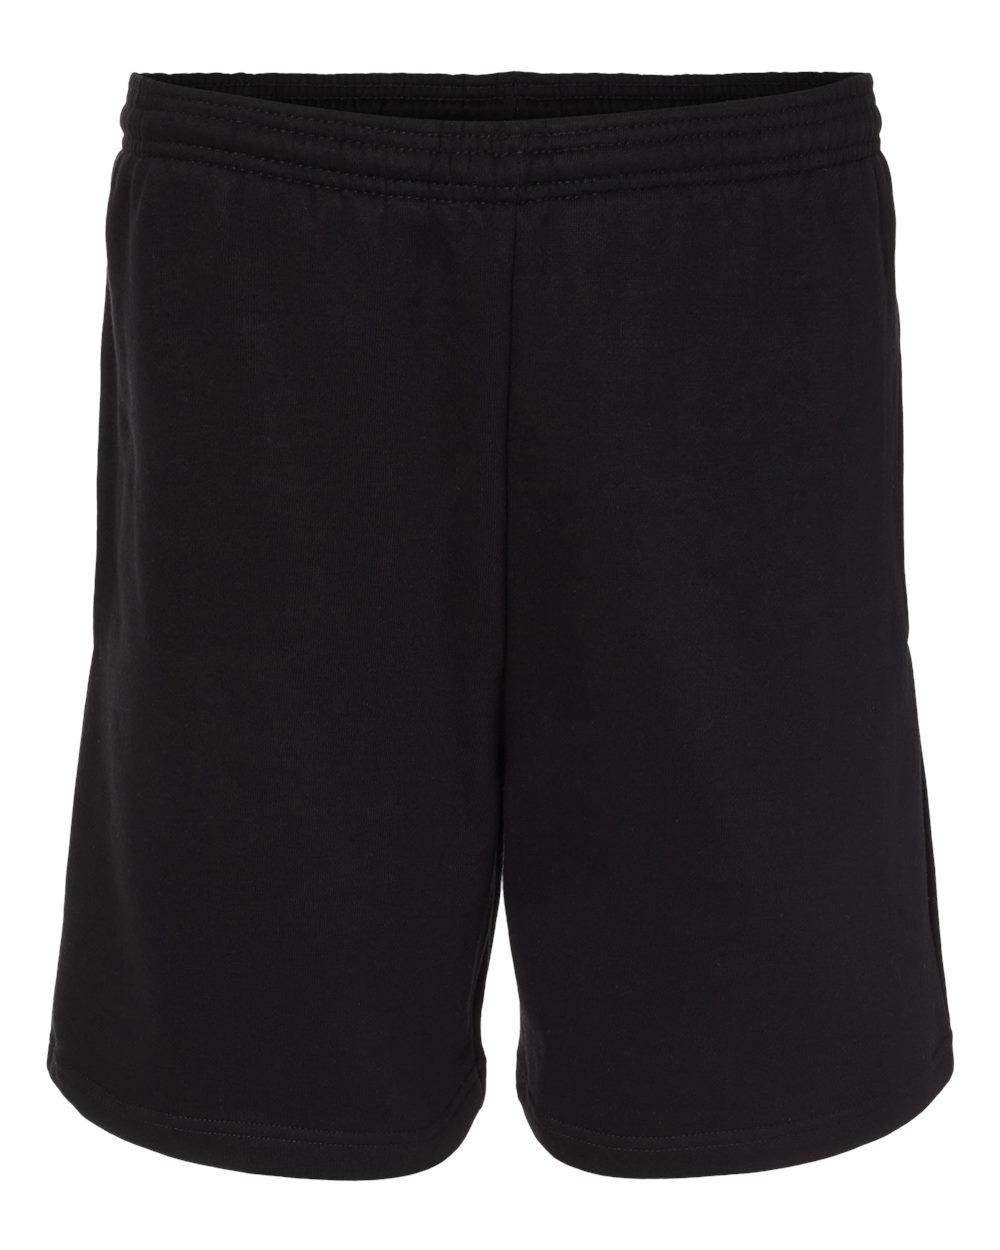 Badger 1207 Athletic Fleece Shorts